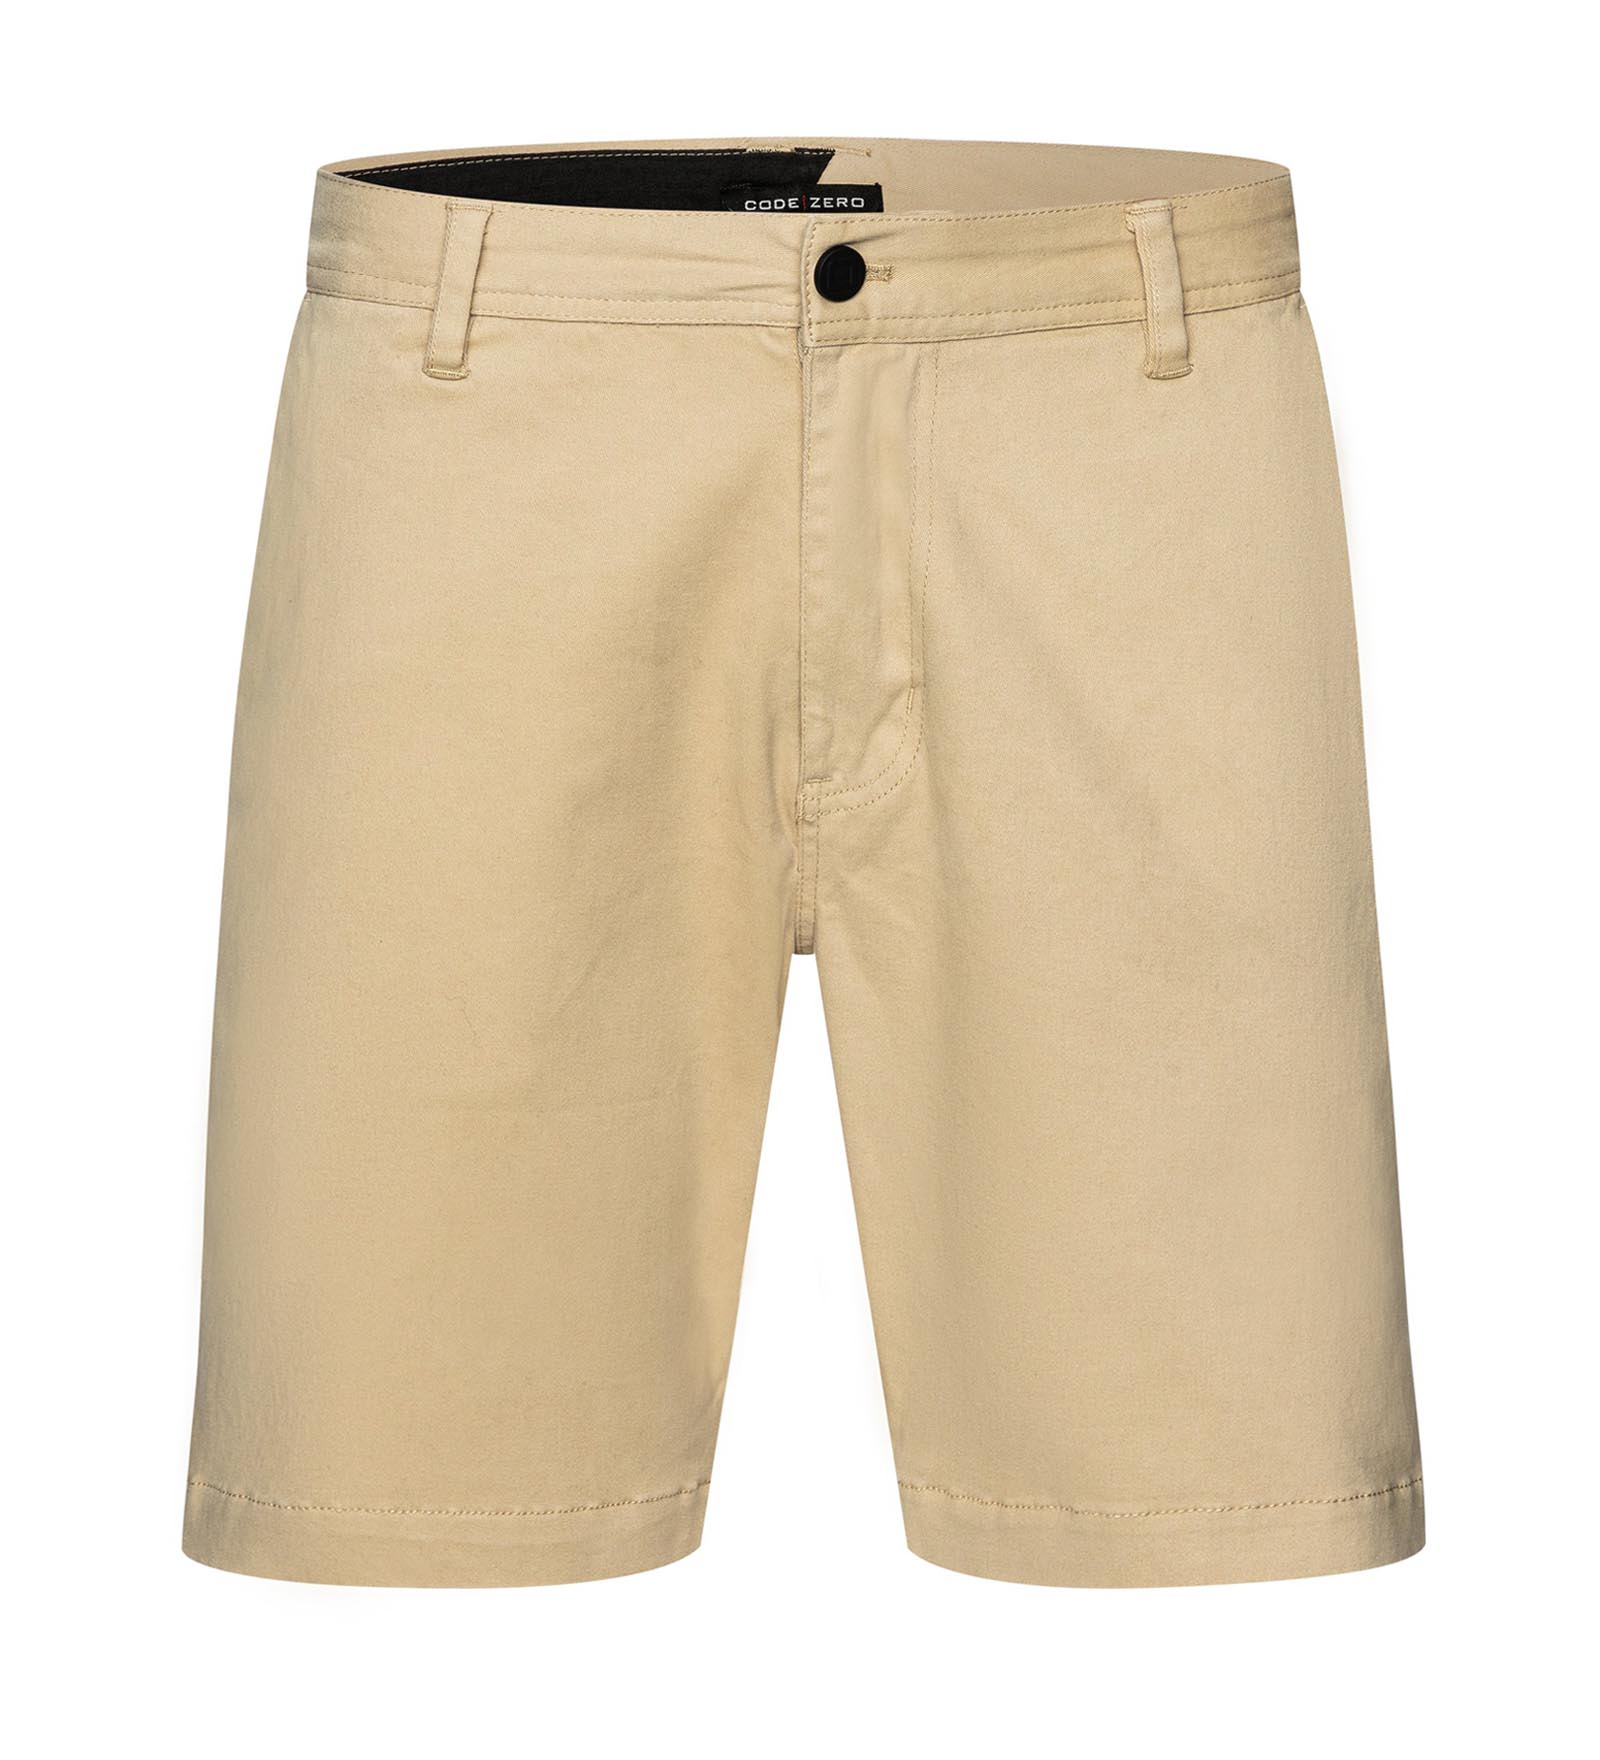 Men's Beige Shorts